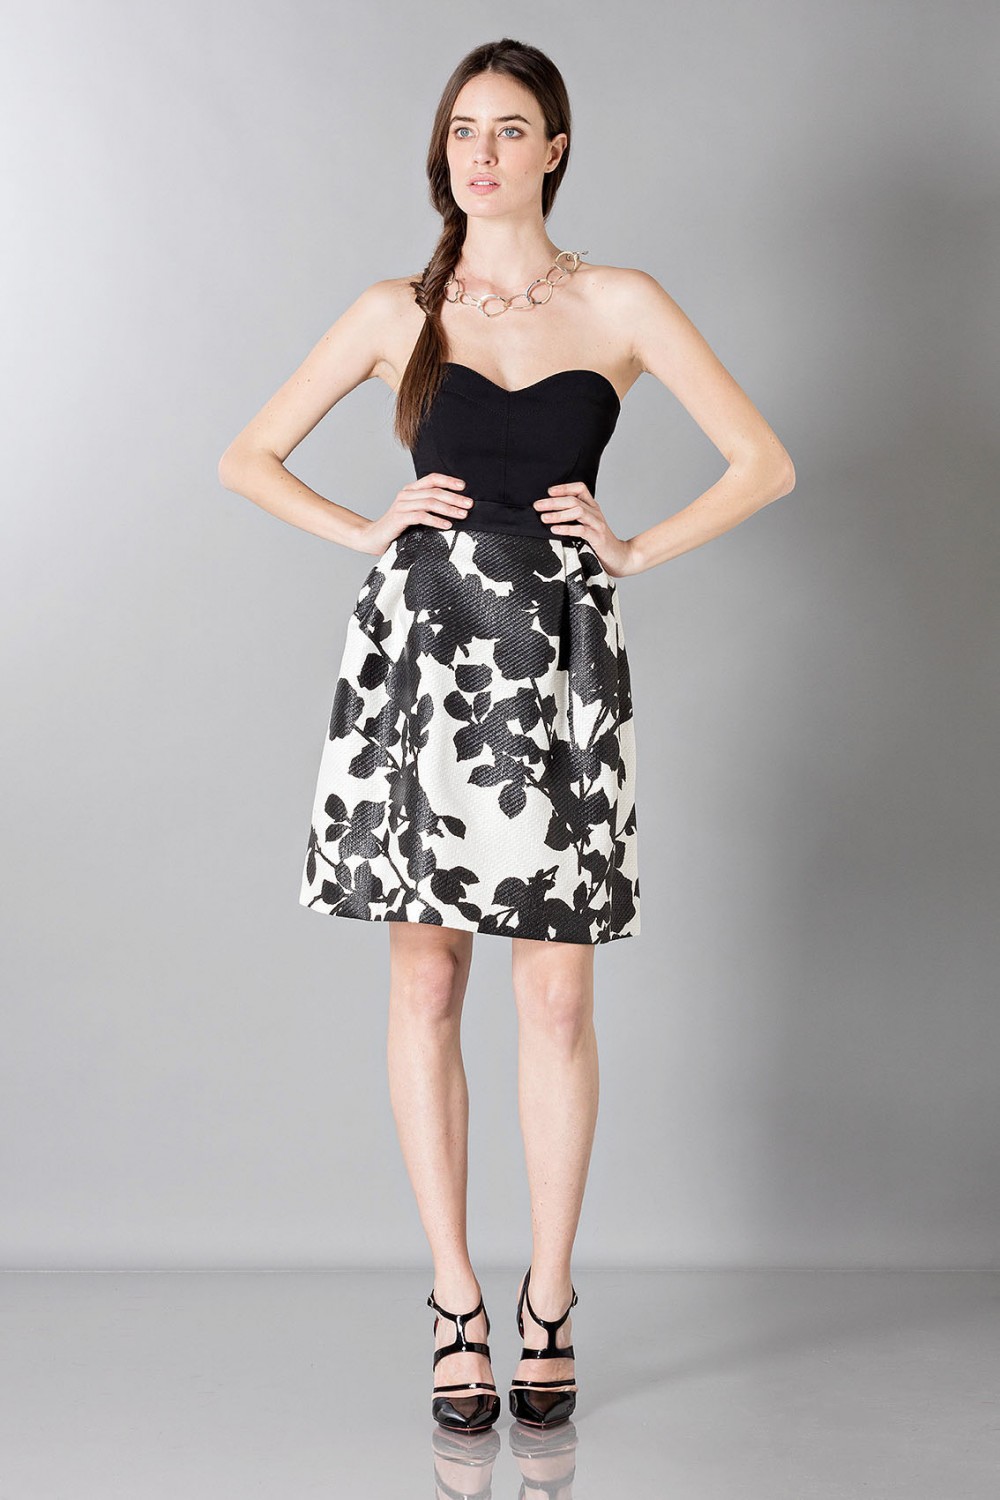  Floreal patterned skirt